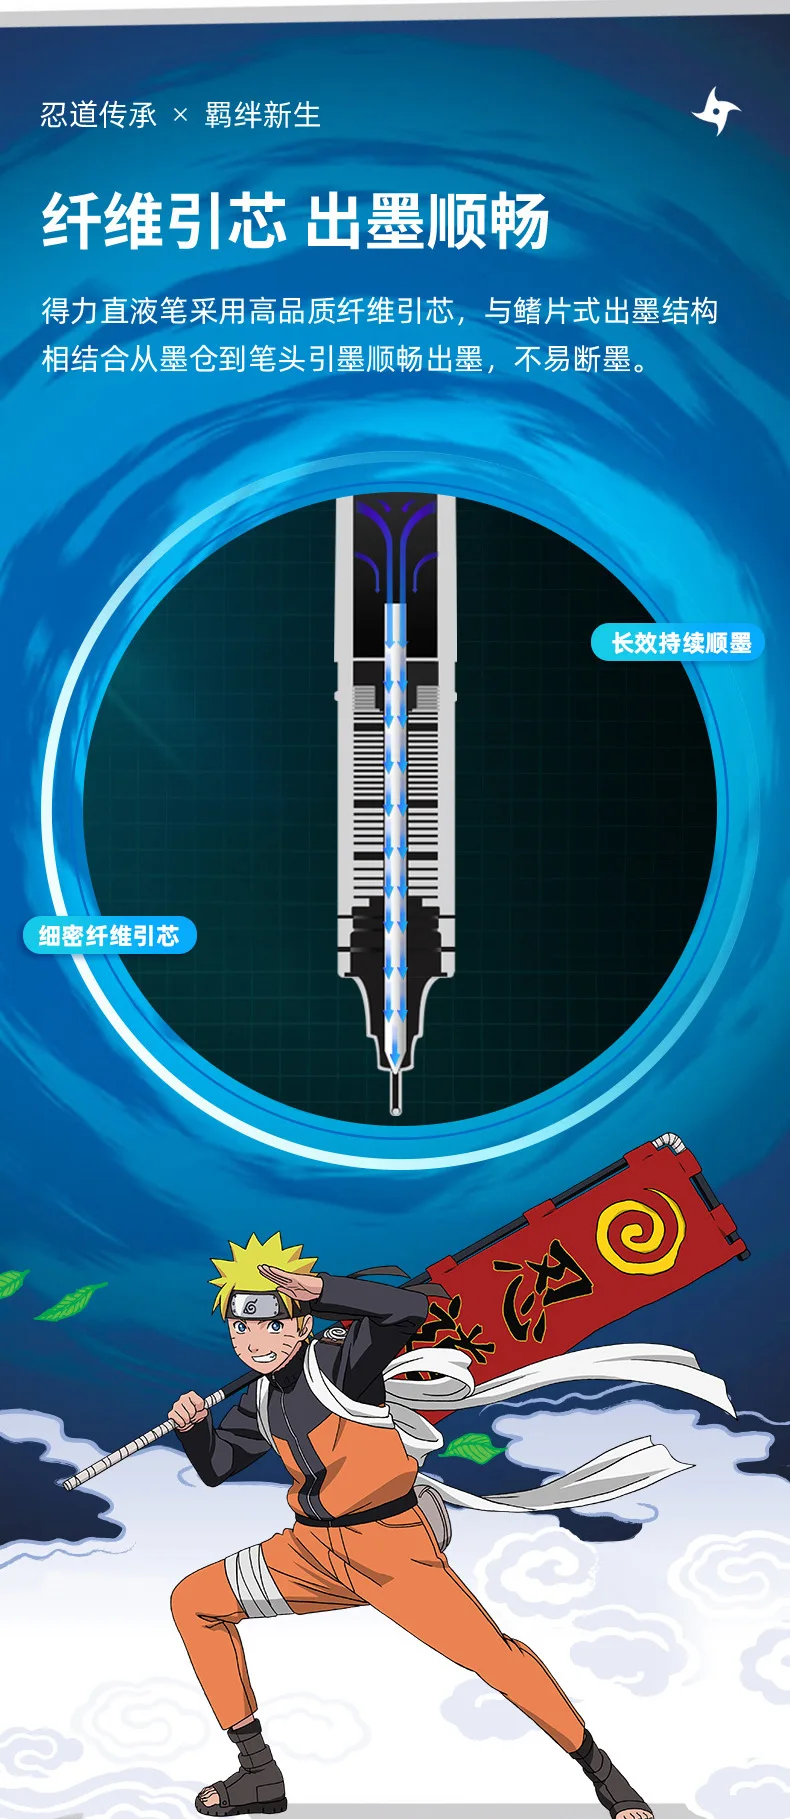 Deli Pen 48Pcs Naruto Series Rollerball Pens for School Supplies